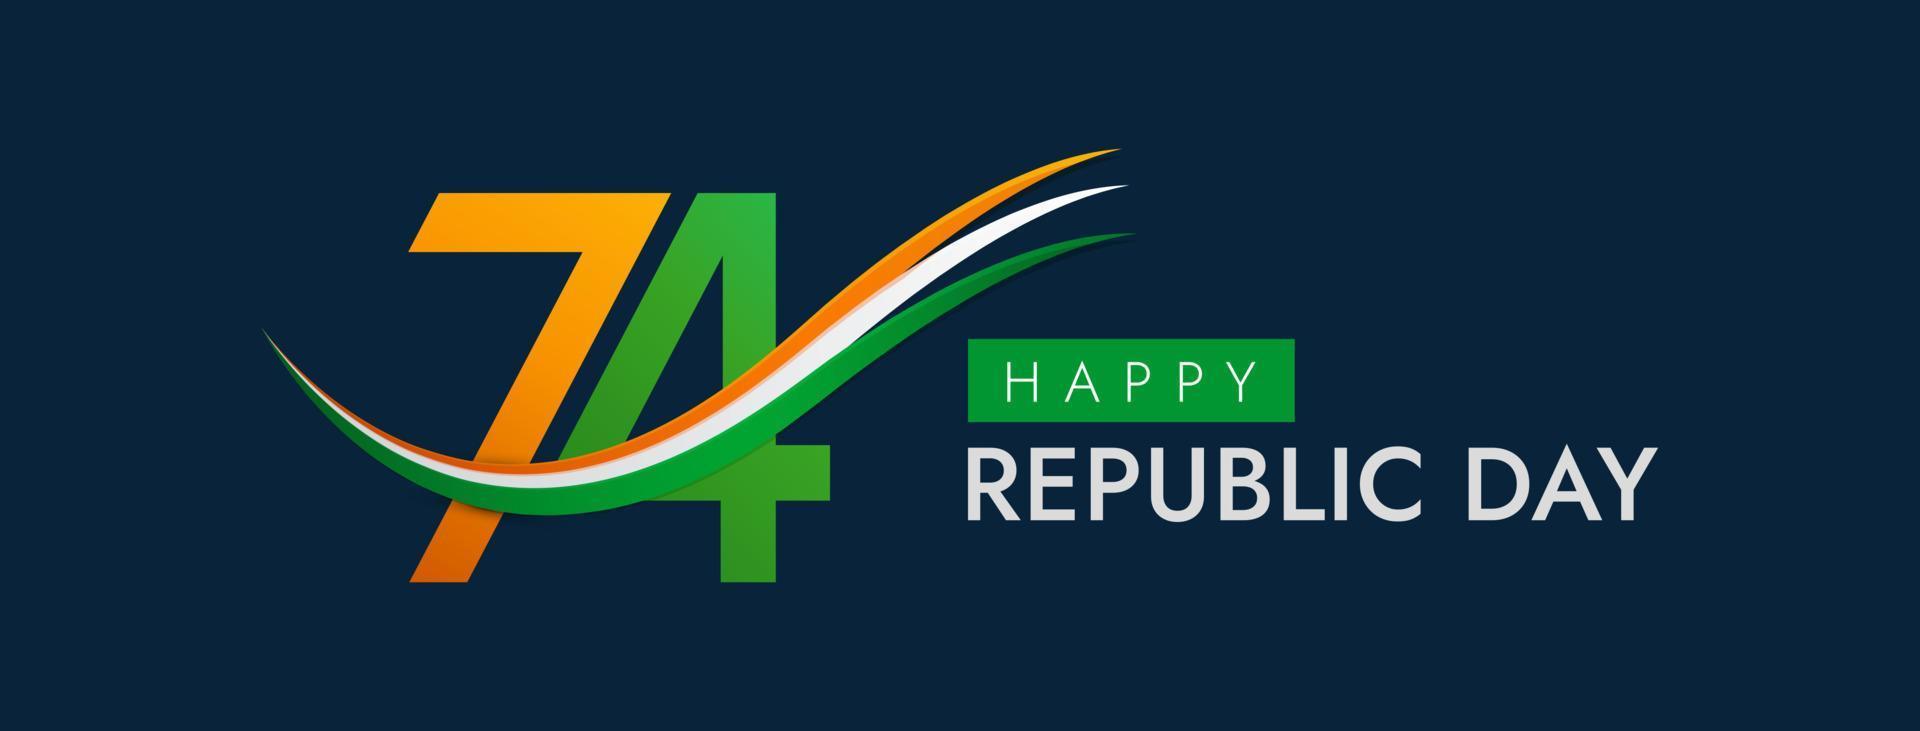 26 januari Indië republiek dag 74e viering sociaal media post vector